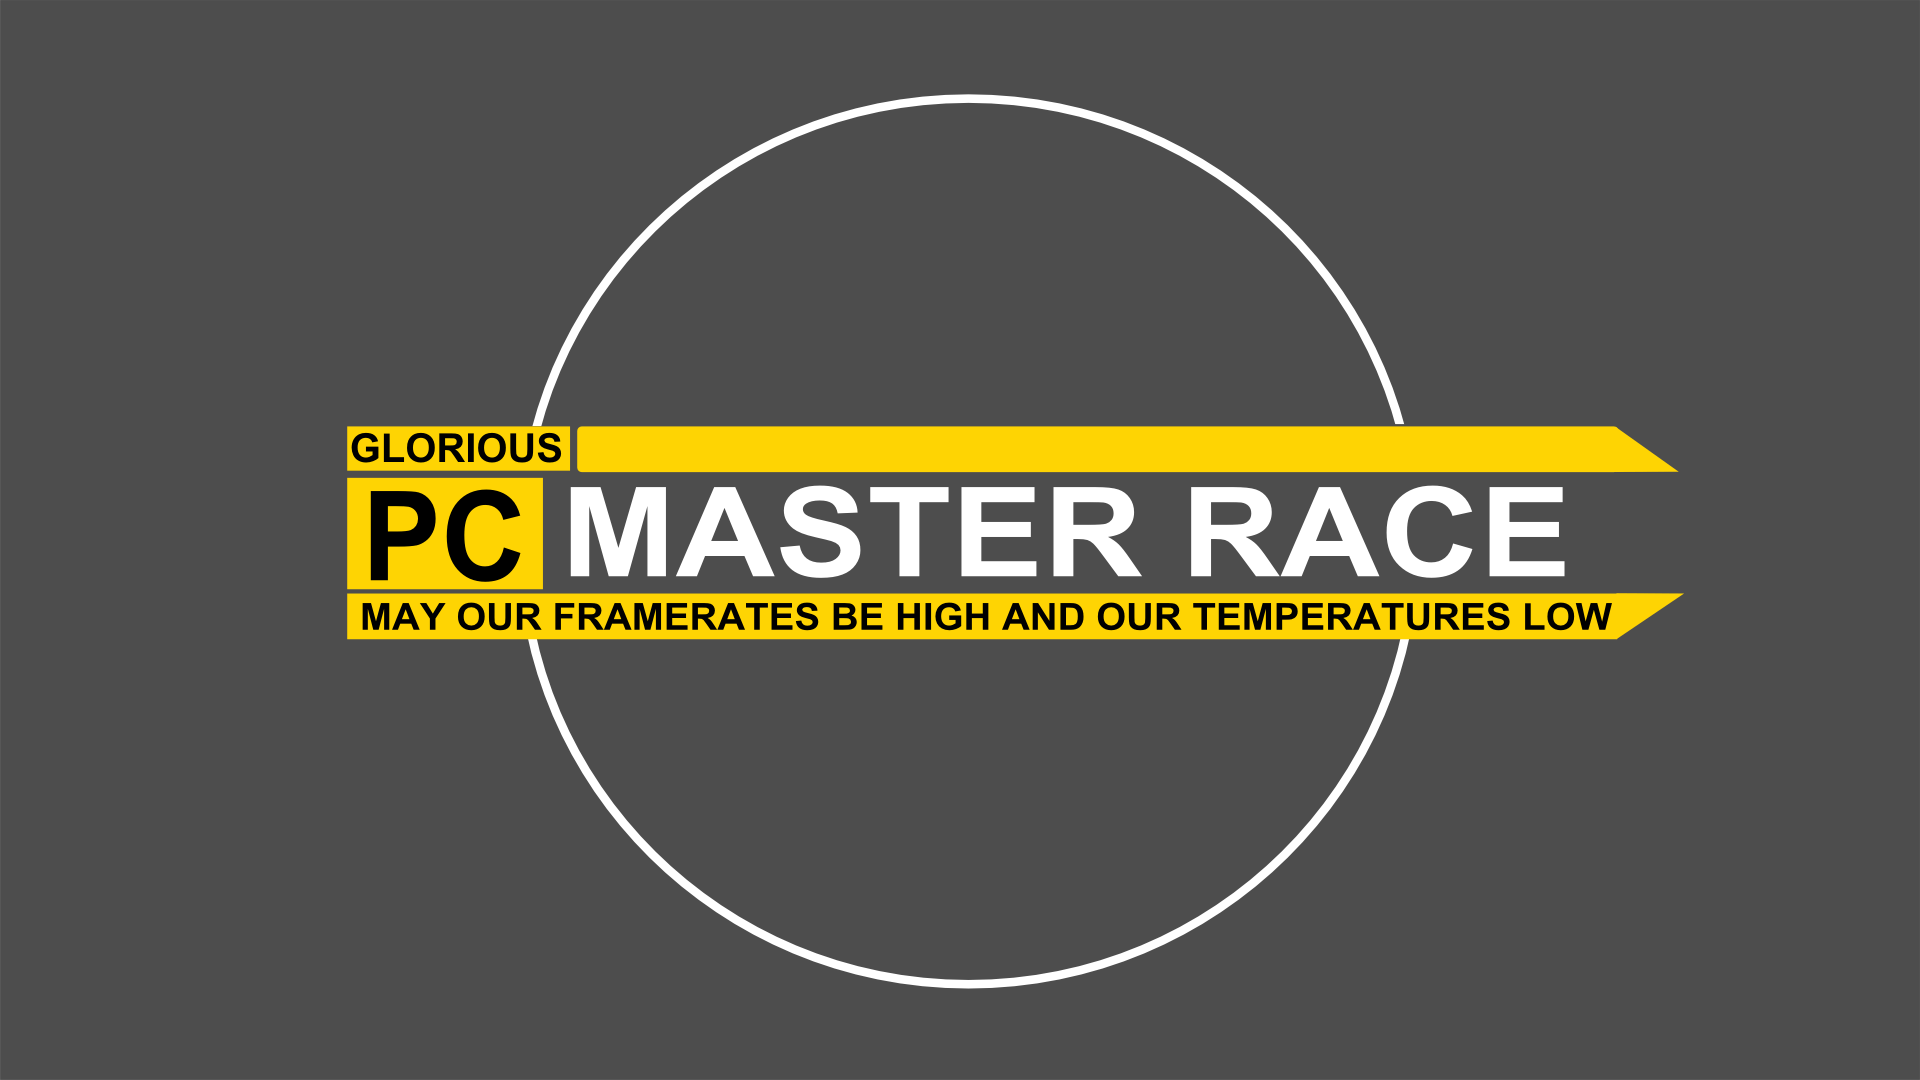 PC Master Race. Glorious PC Gaming Race logo. Бренд мастер логотип. Race слово.